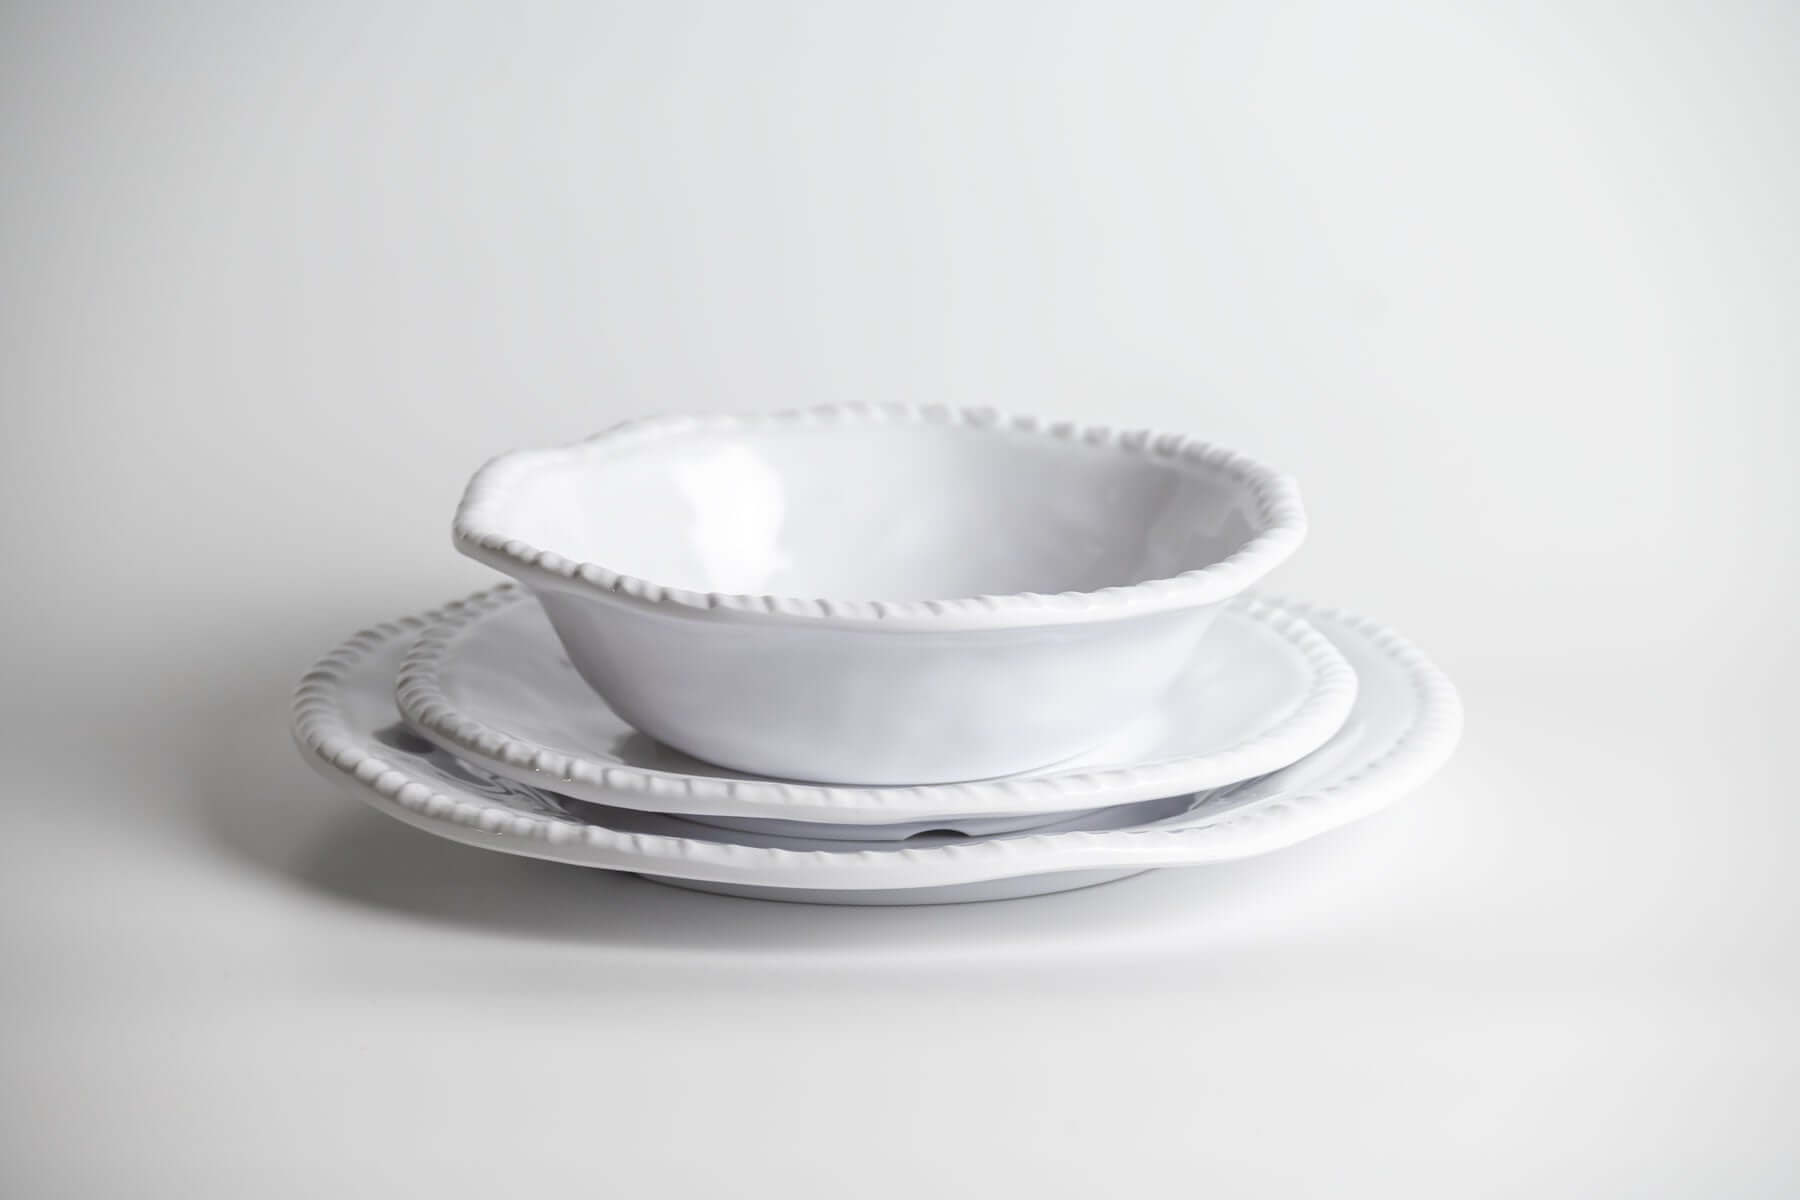 Merritt Designs White Rope Melamine Dinnerware Collecion